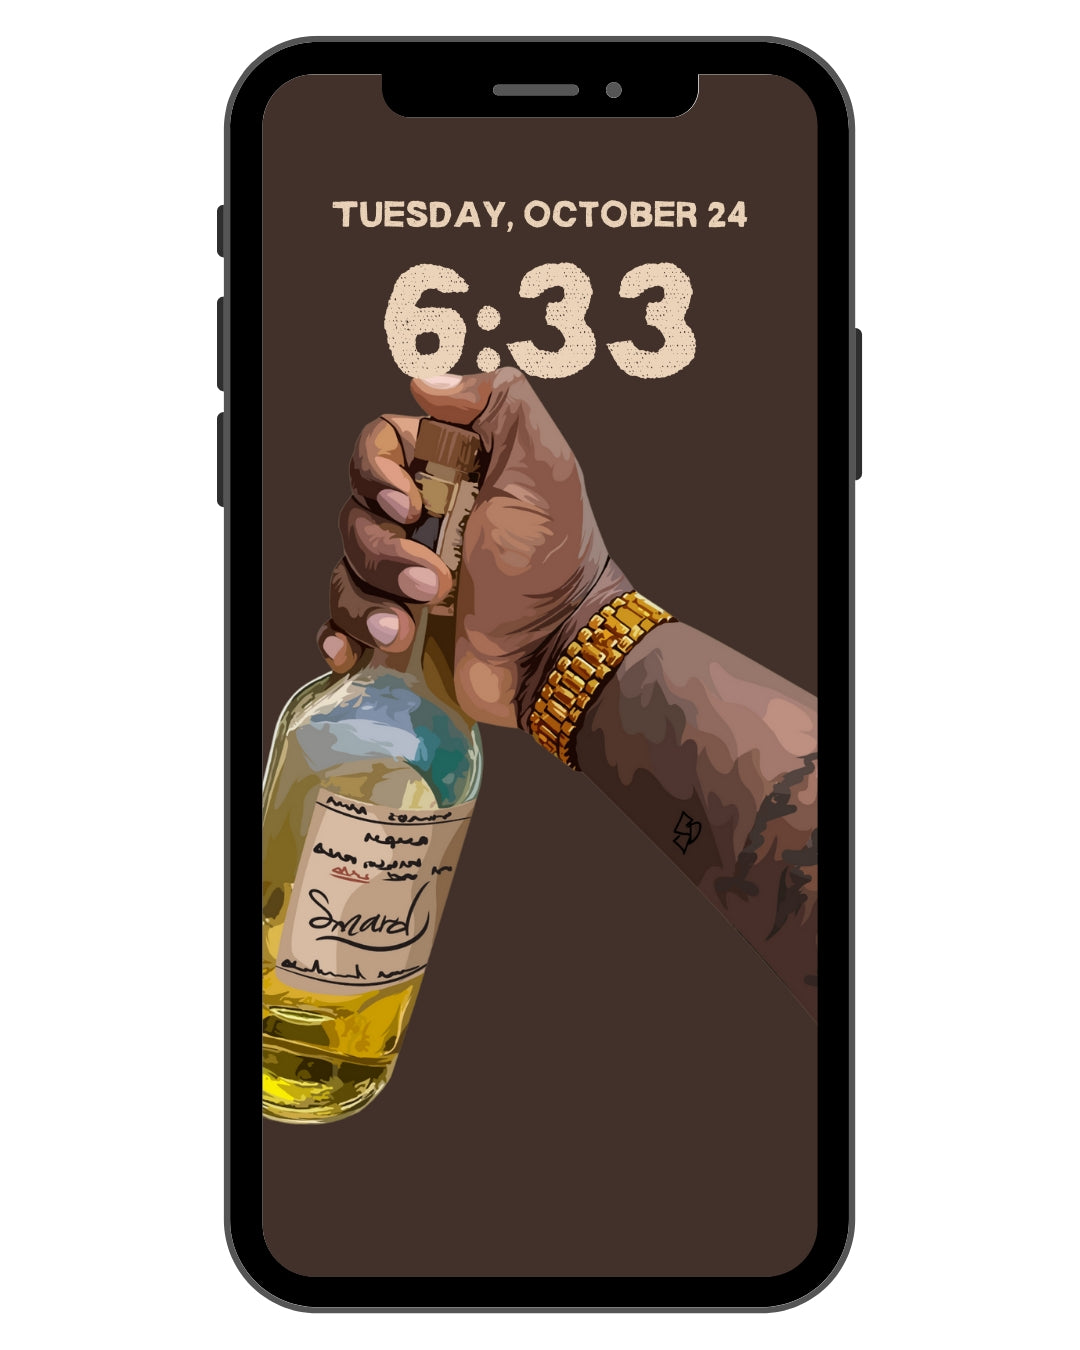 Smard Drink - Phone Screensaver